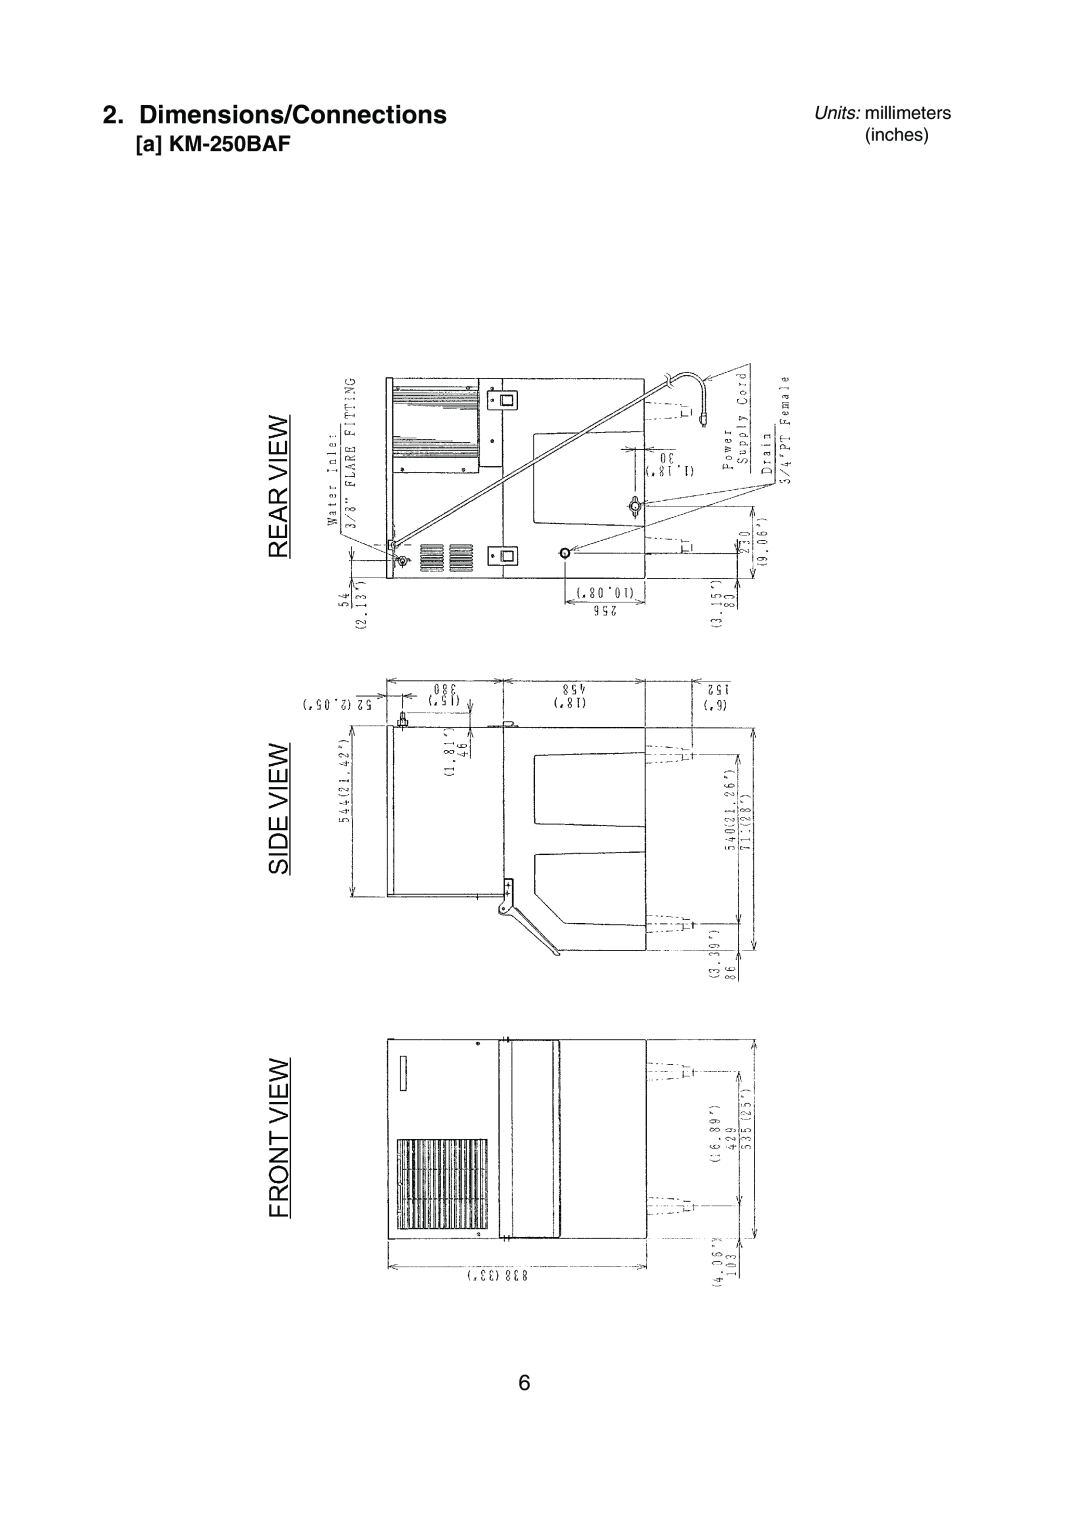 Hoshizaki KM-250BWF instruction manual Dimensions/Connections, aKM-250BAF, Units millimeters inches 